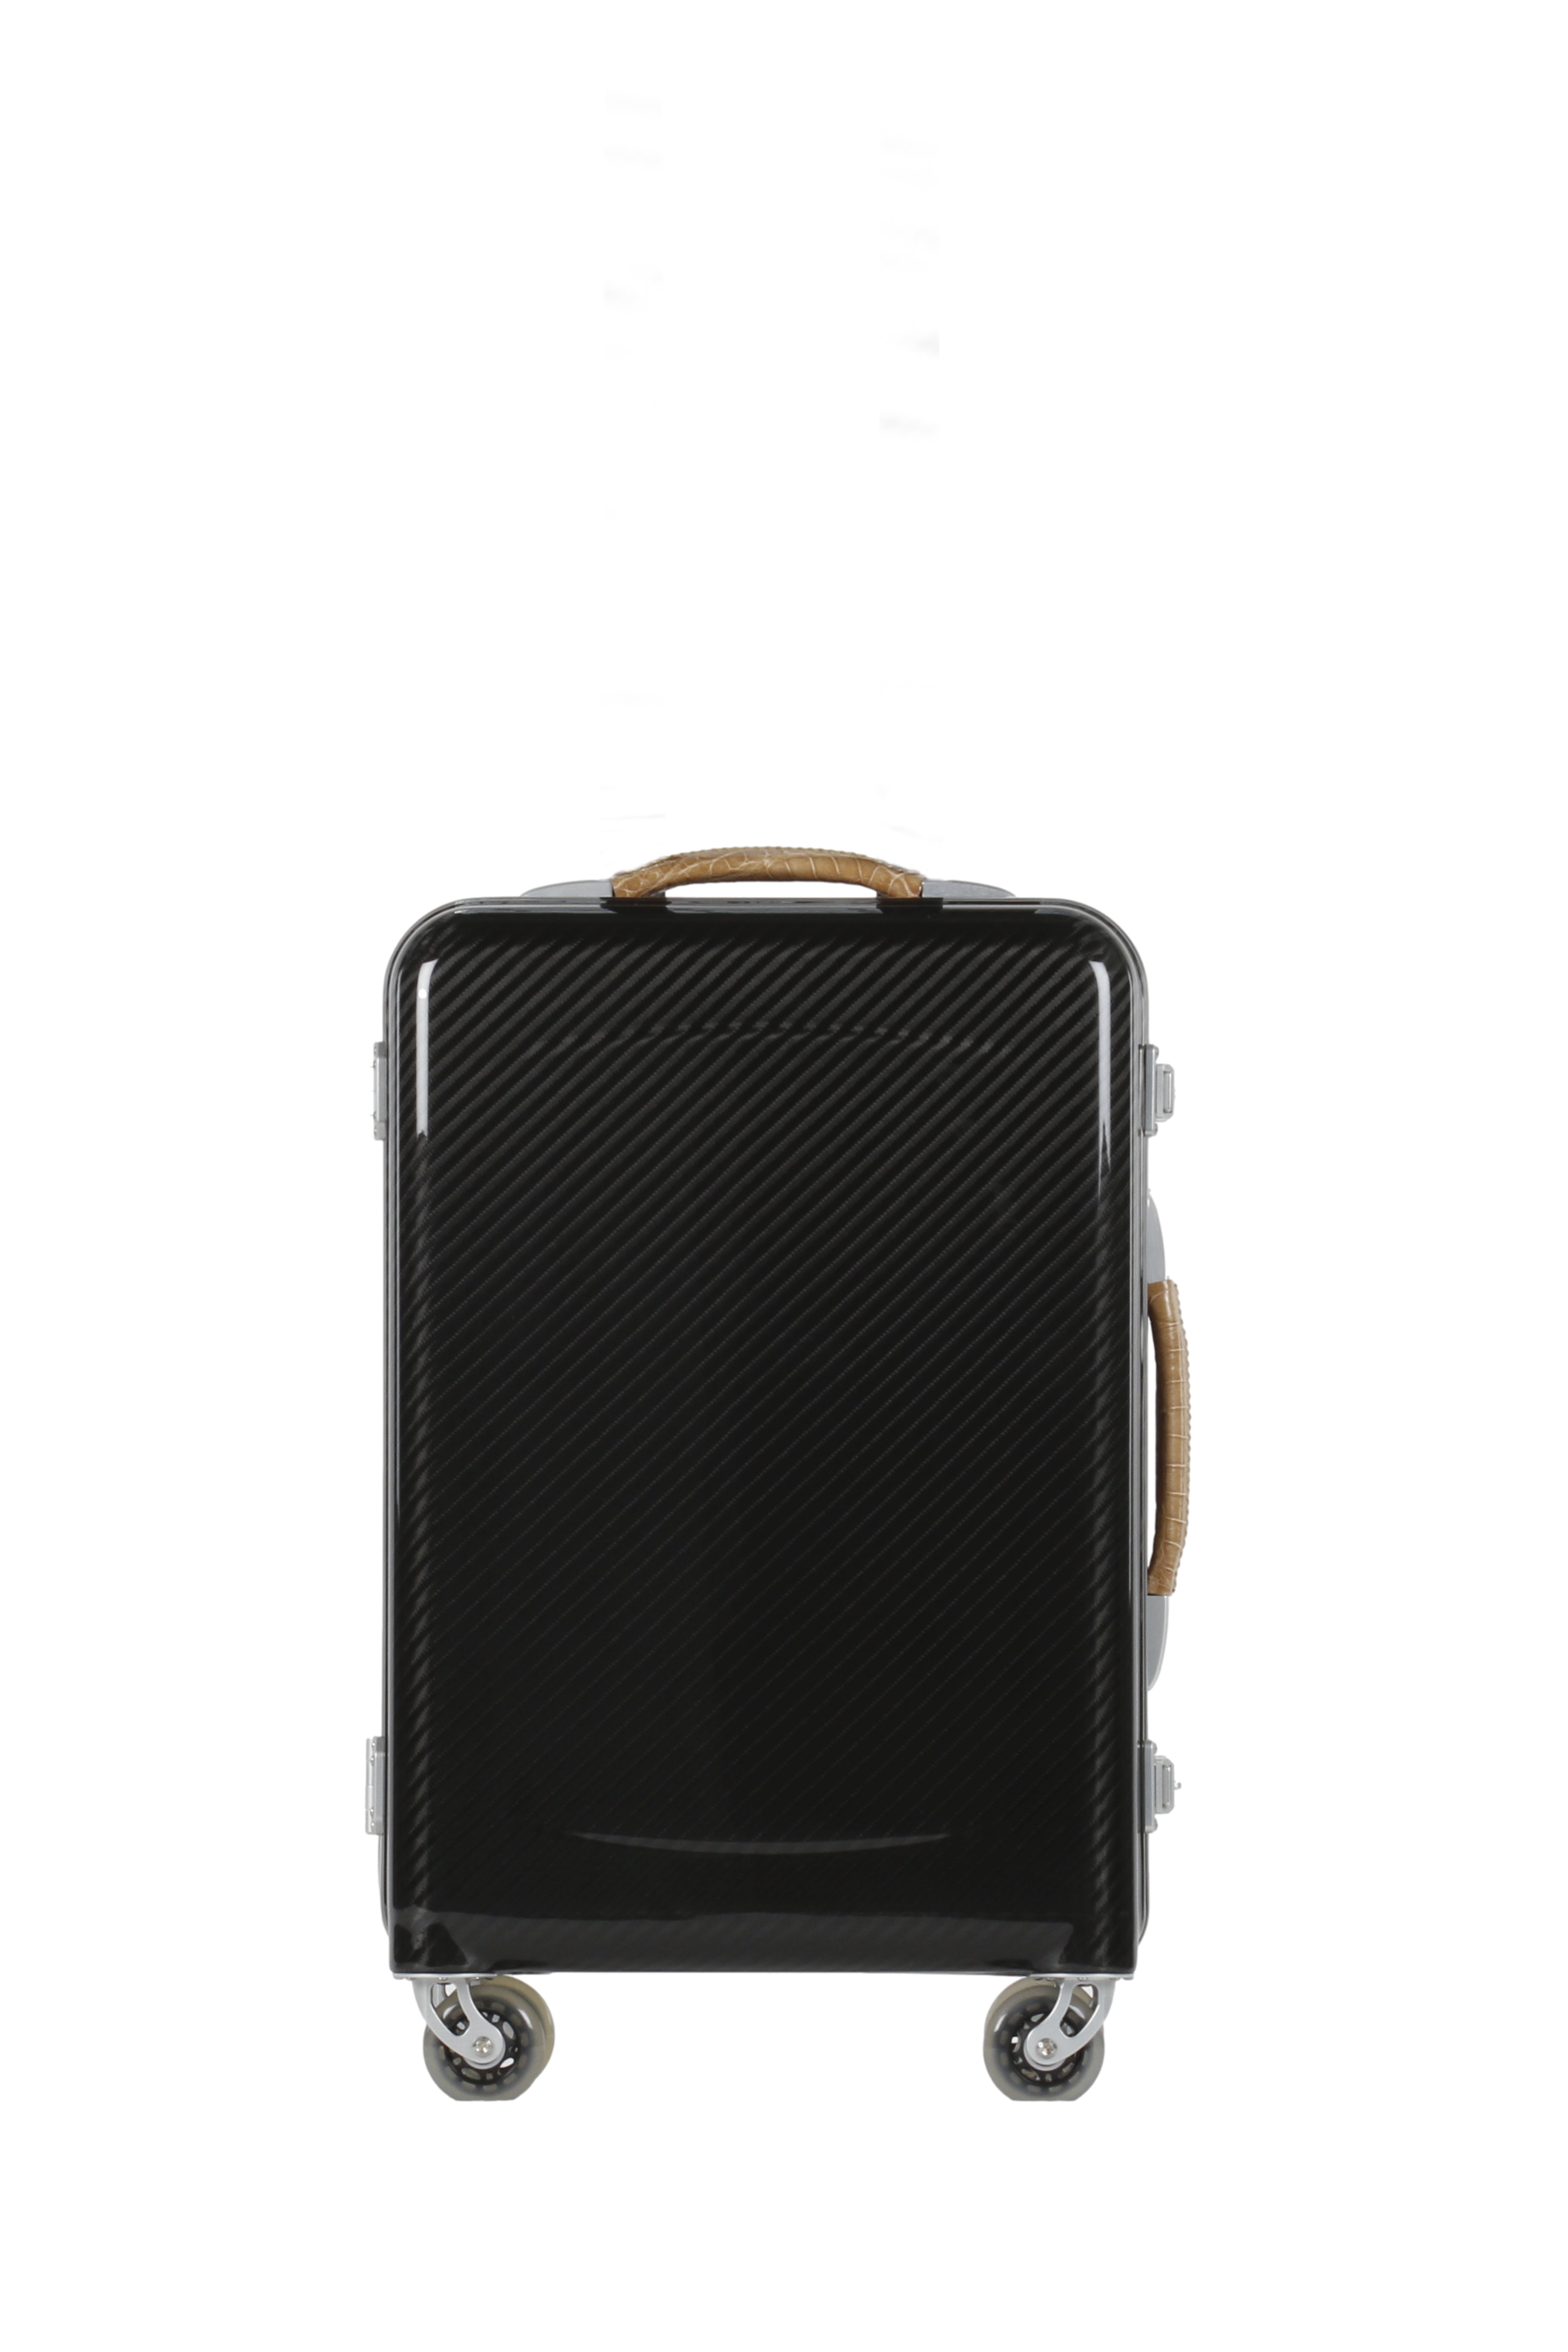 TecknoMonster | Italian Luxury Luggage and Bags